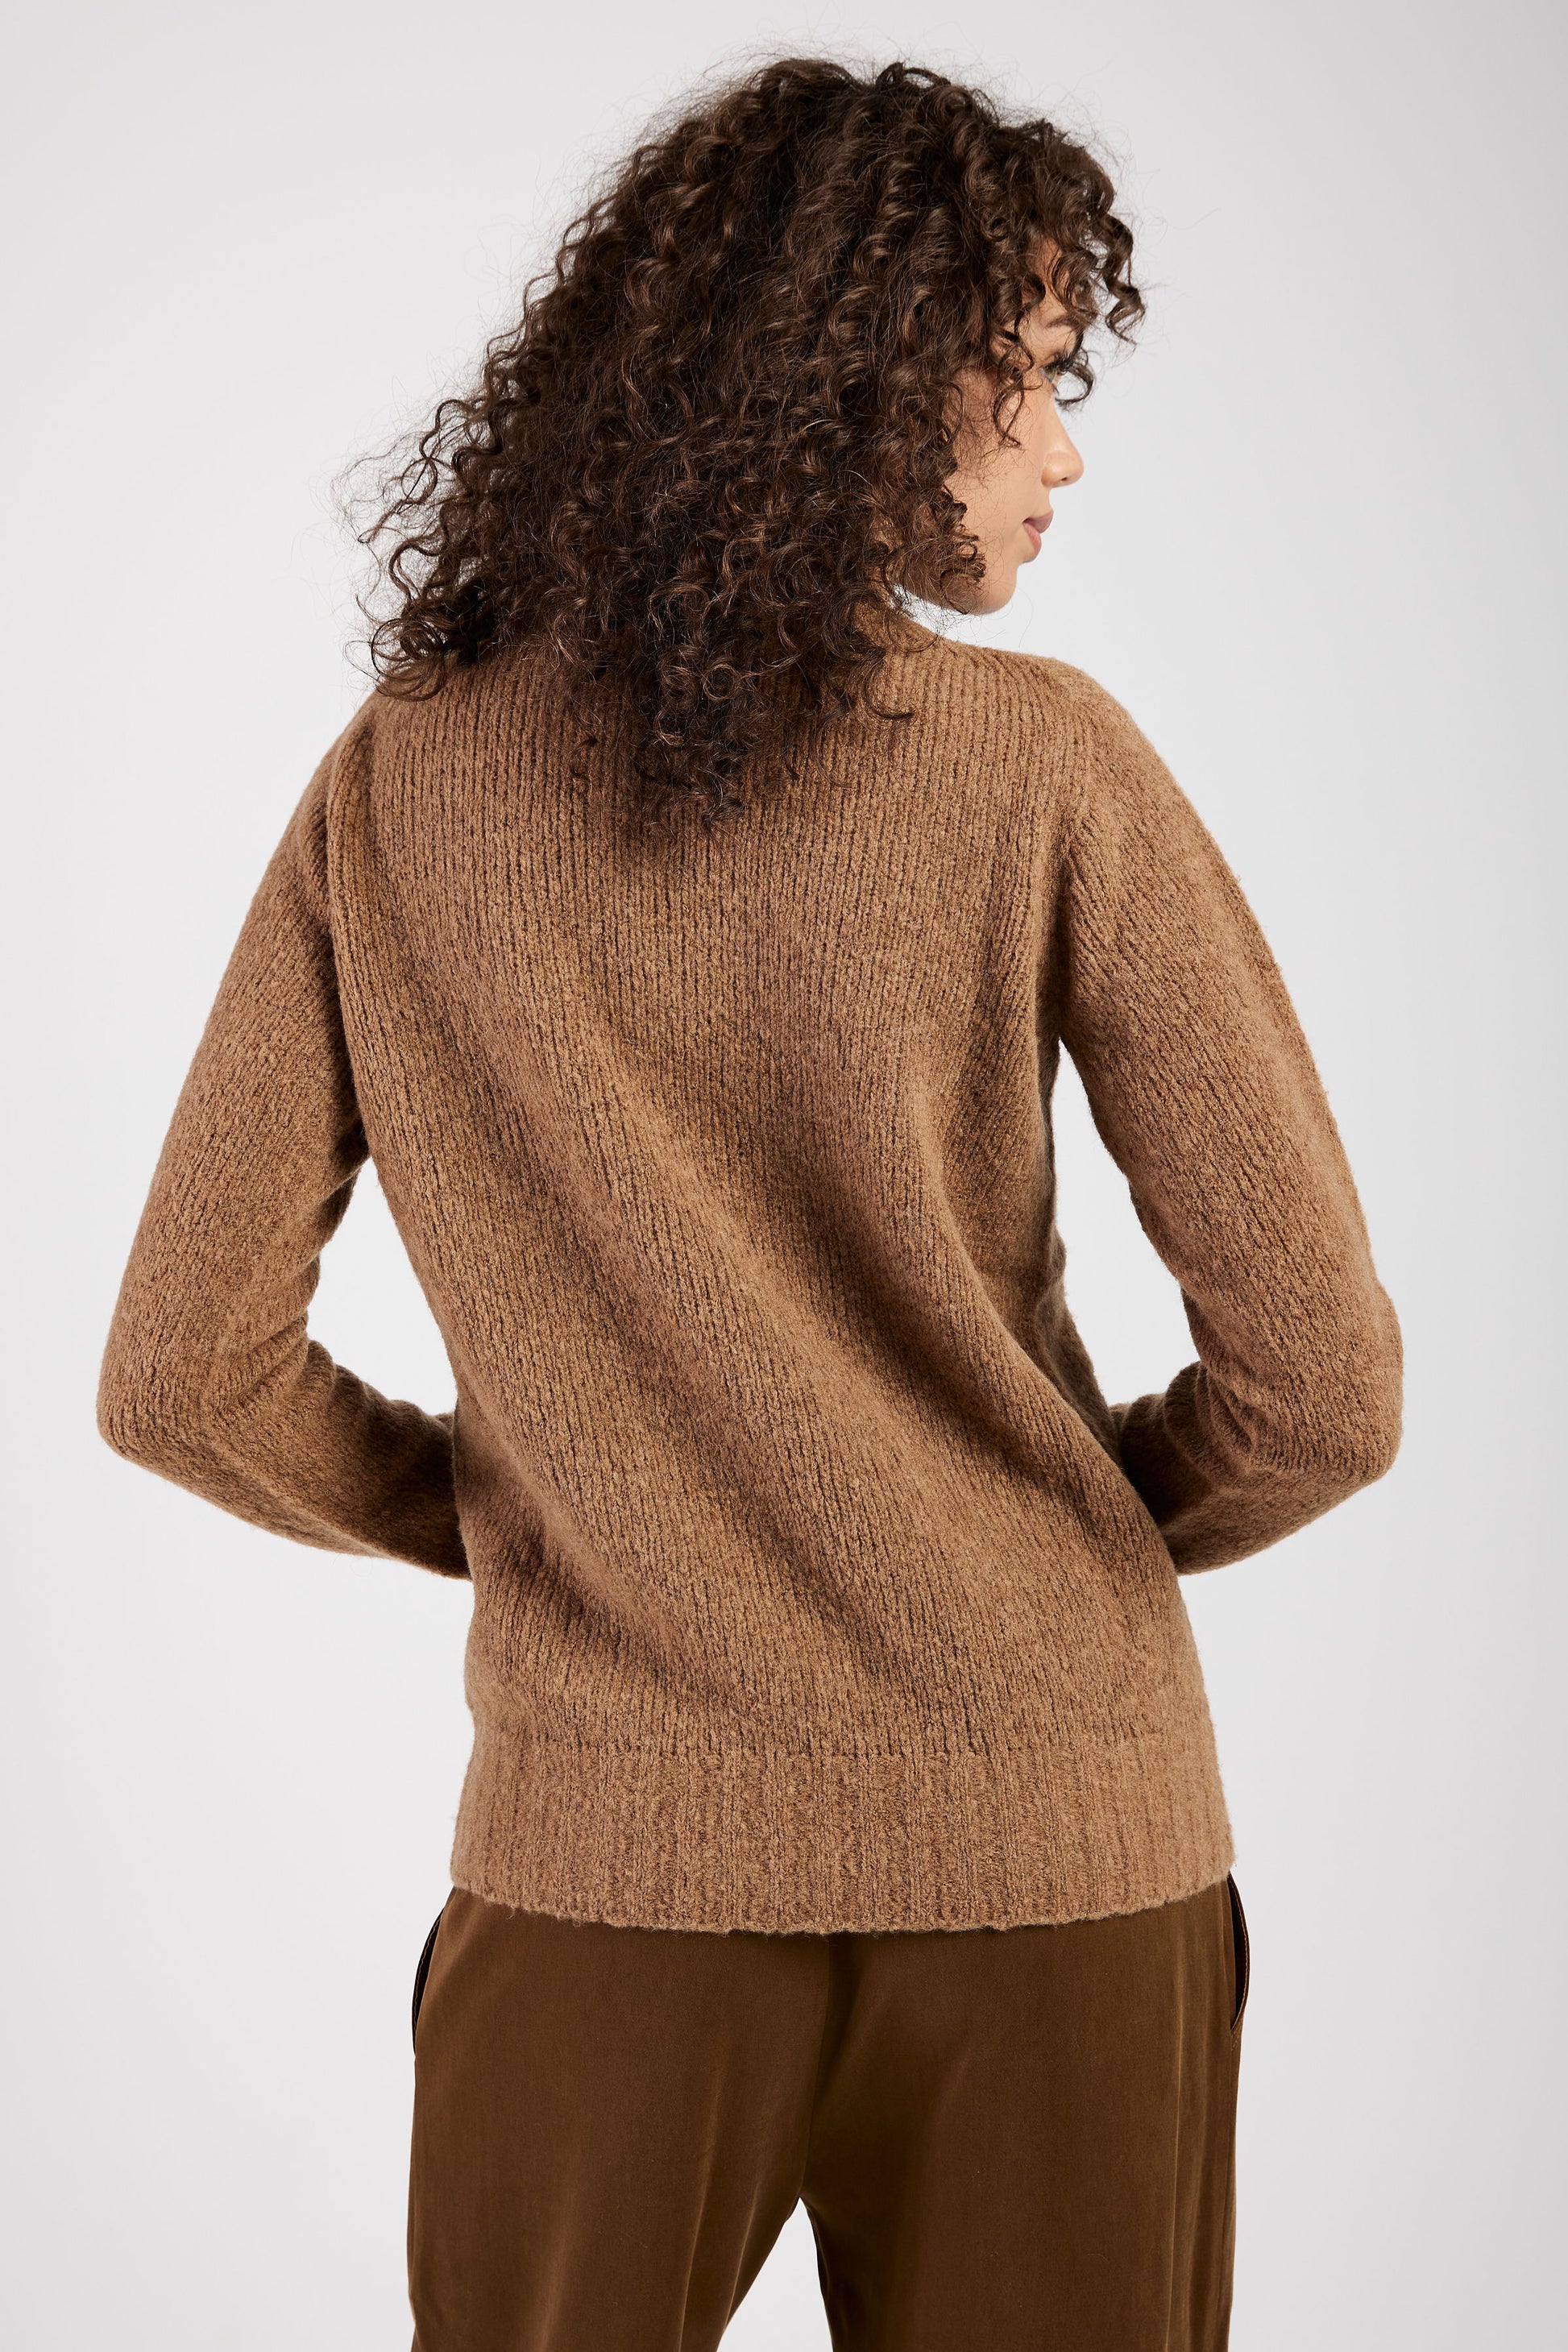 GENTRYPORTOFINO Wool Knit Sweater in Cammello